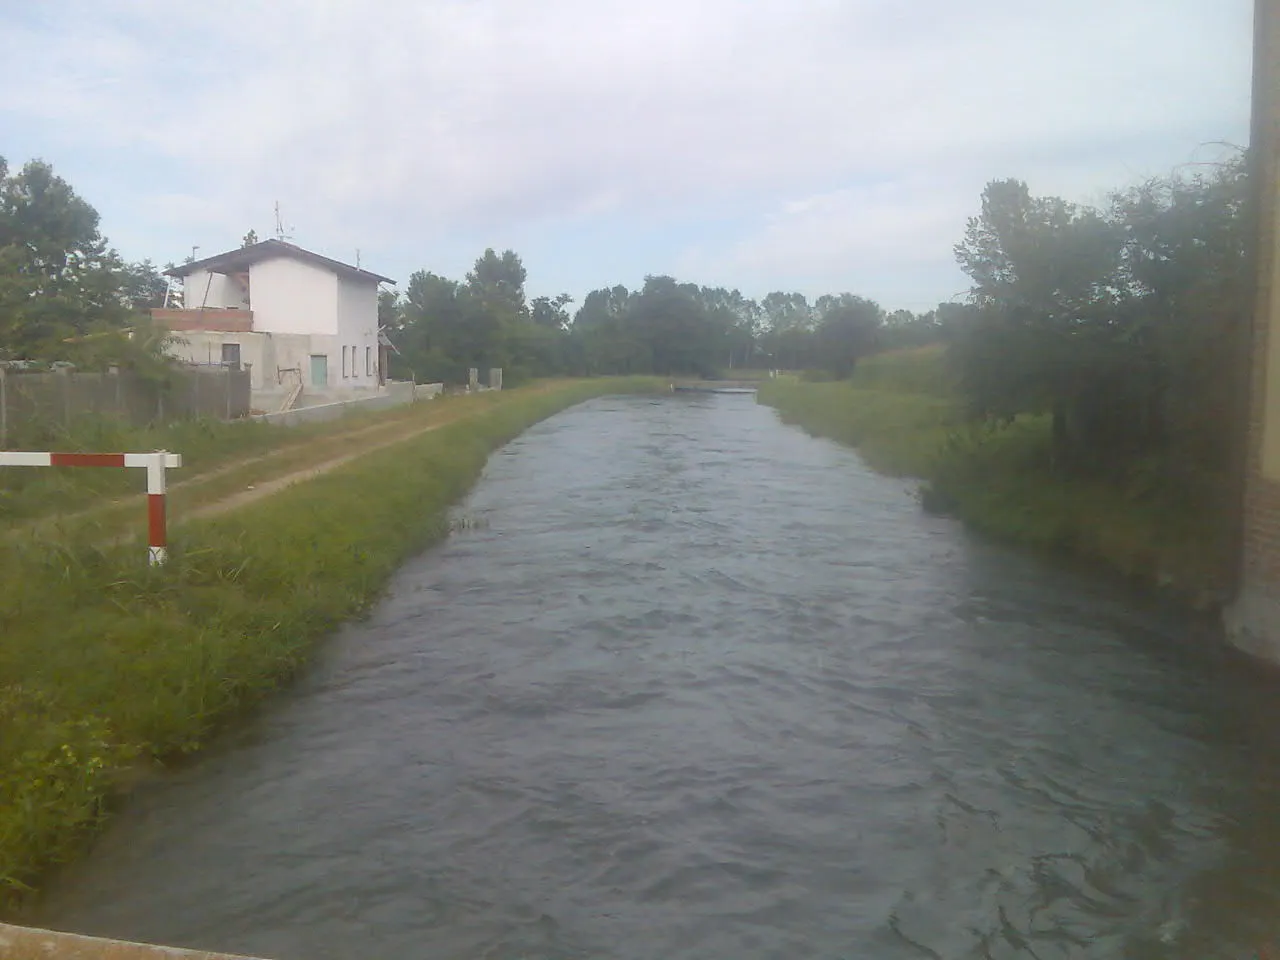 Photo showing: The Ciria Nuova canal near the village of Mirabello Ciria, where it begins.